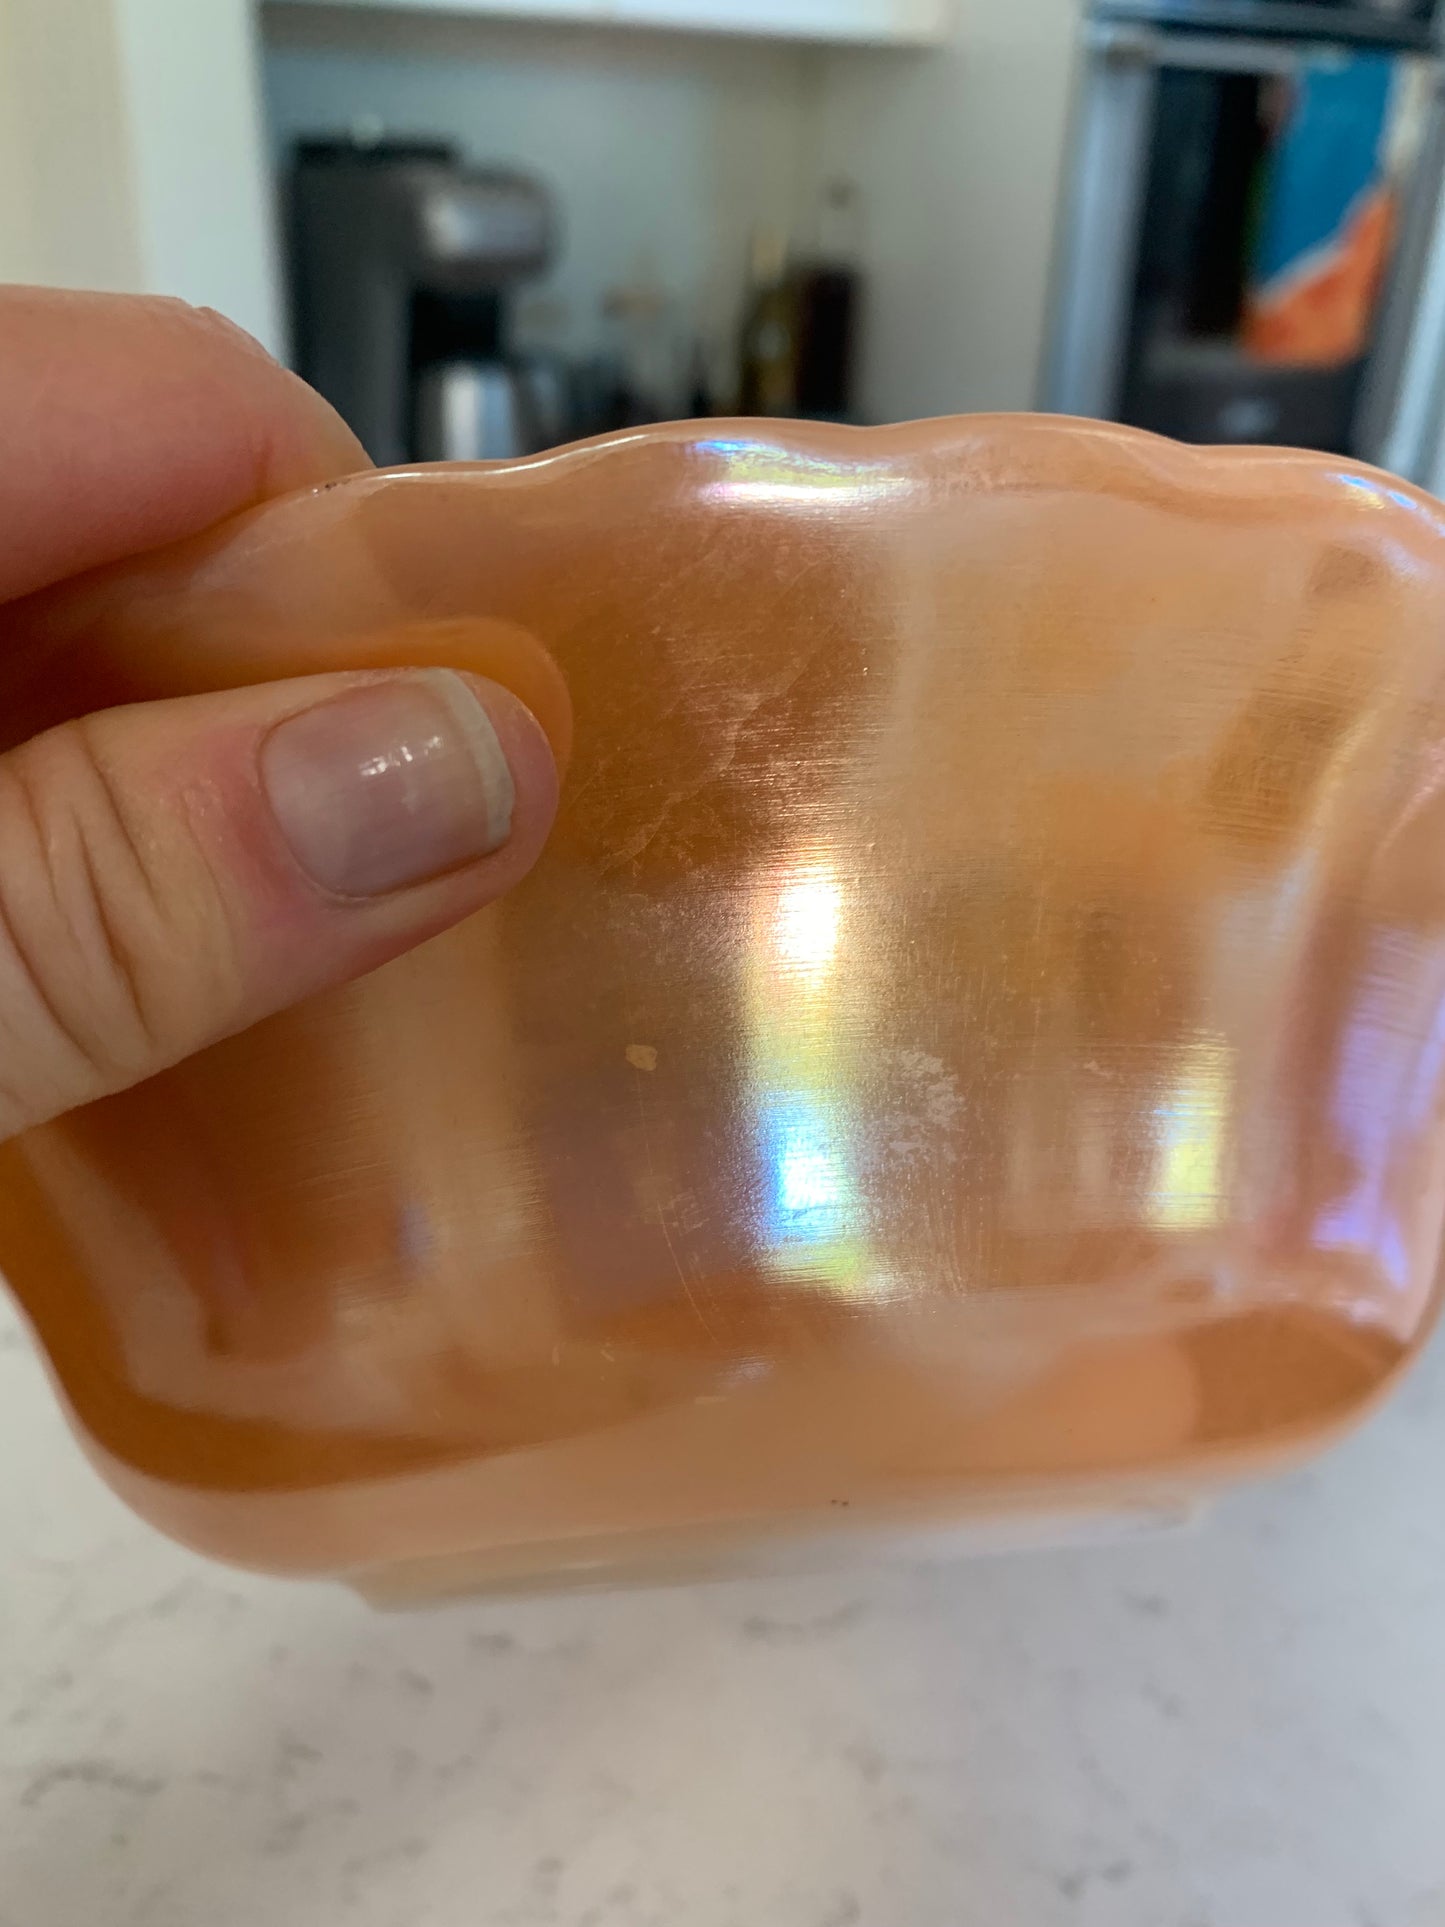 Vintage FireKing Peach Swirl Luster Bowl